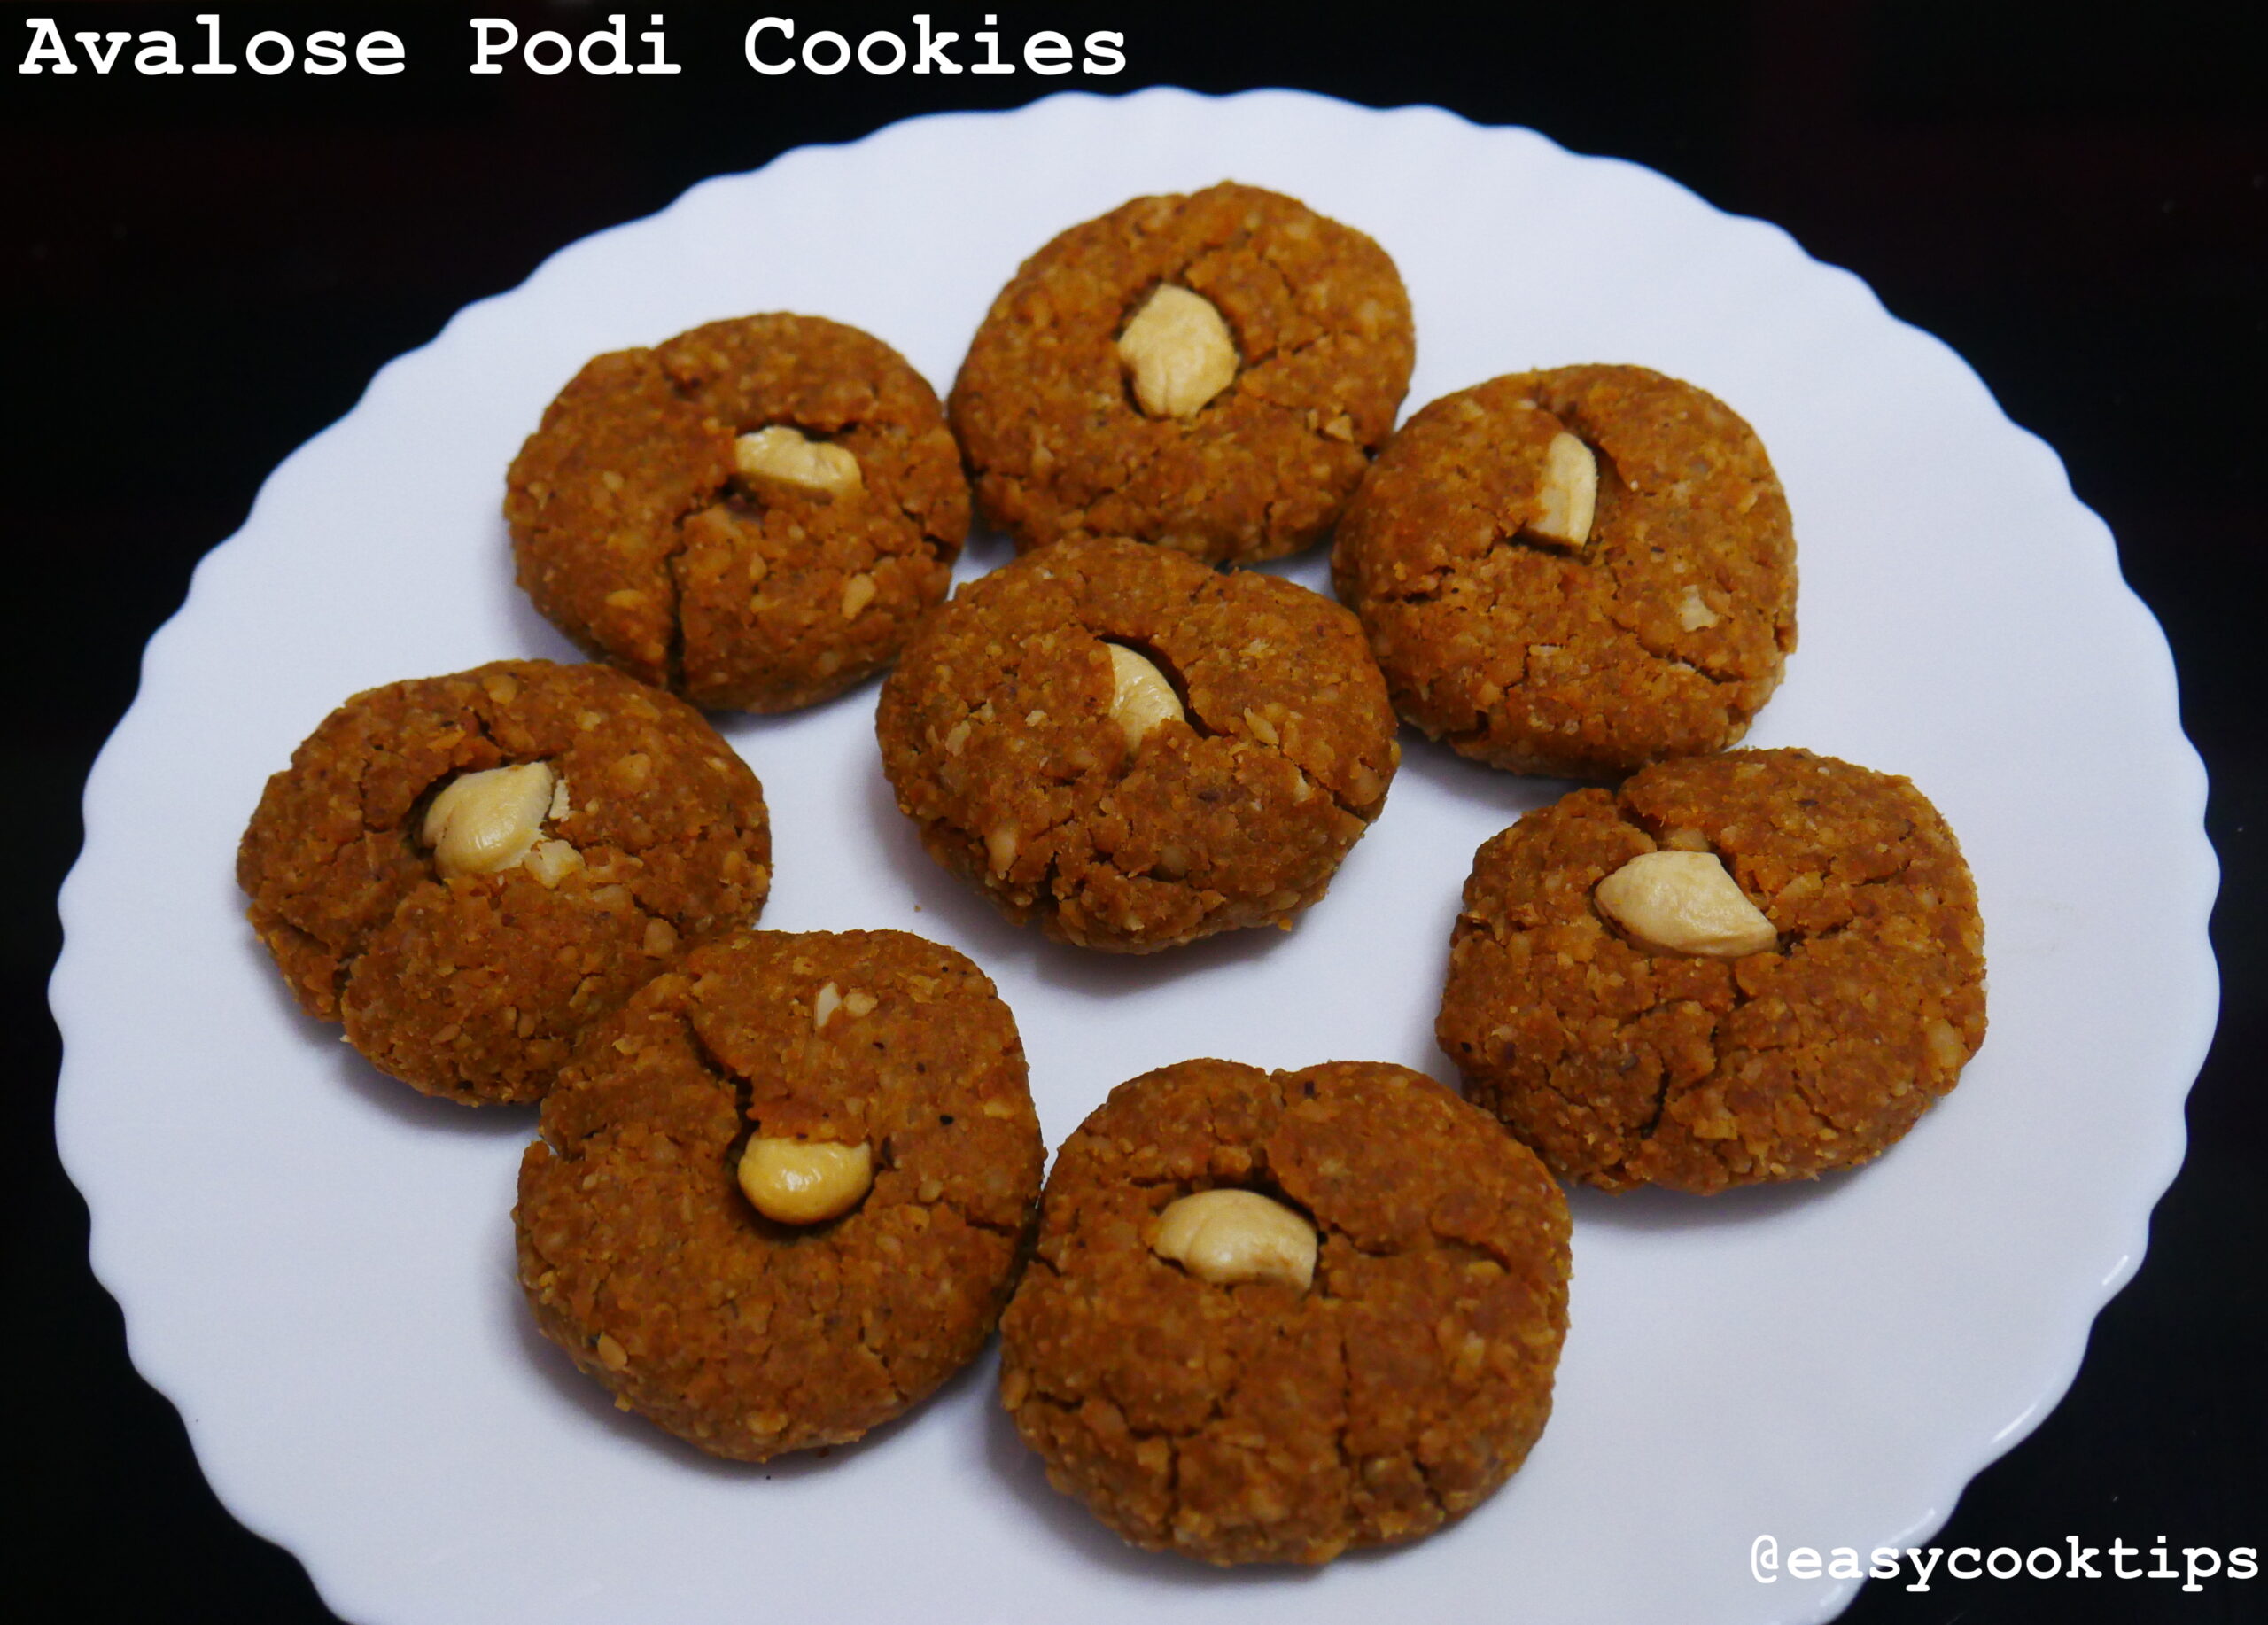 Avalose Podi Cookies